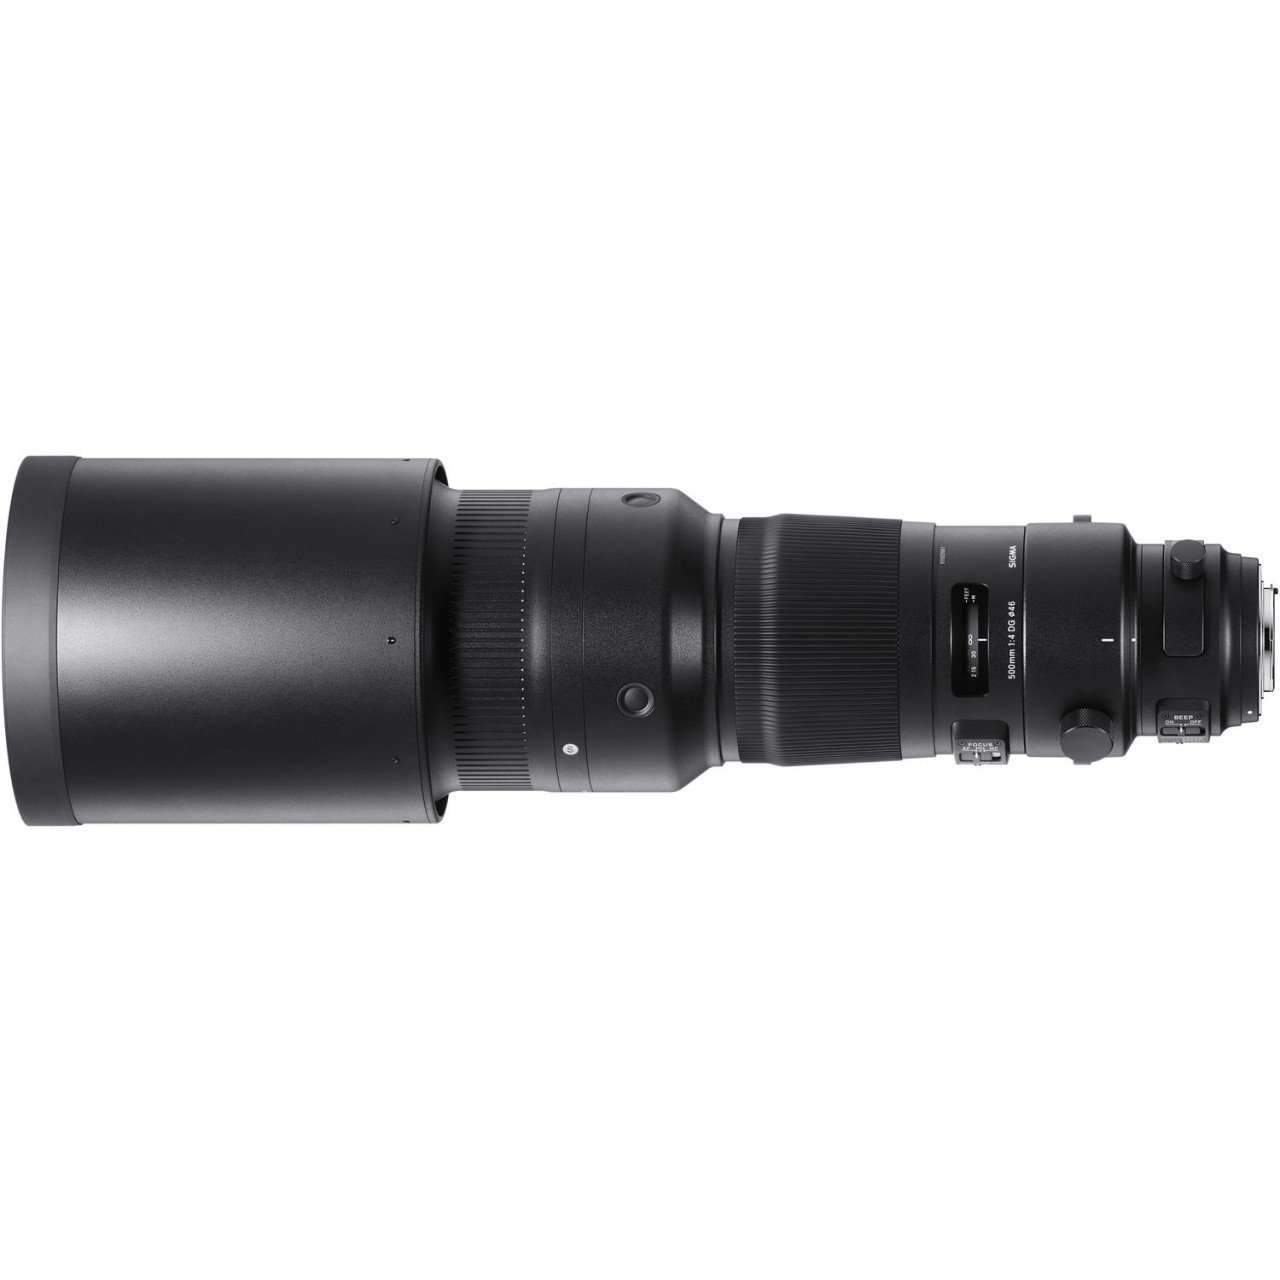 Sigma 500mm f/4 DG OS HSM Sports Lens for Nikon F Sigma Lens - DSLR Fixed Focal Length